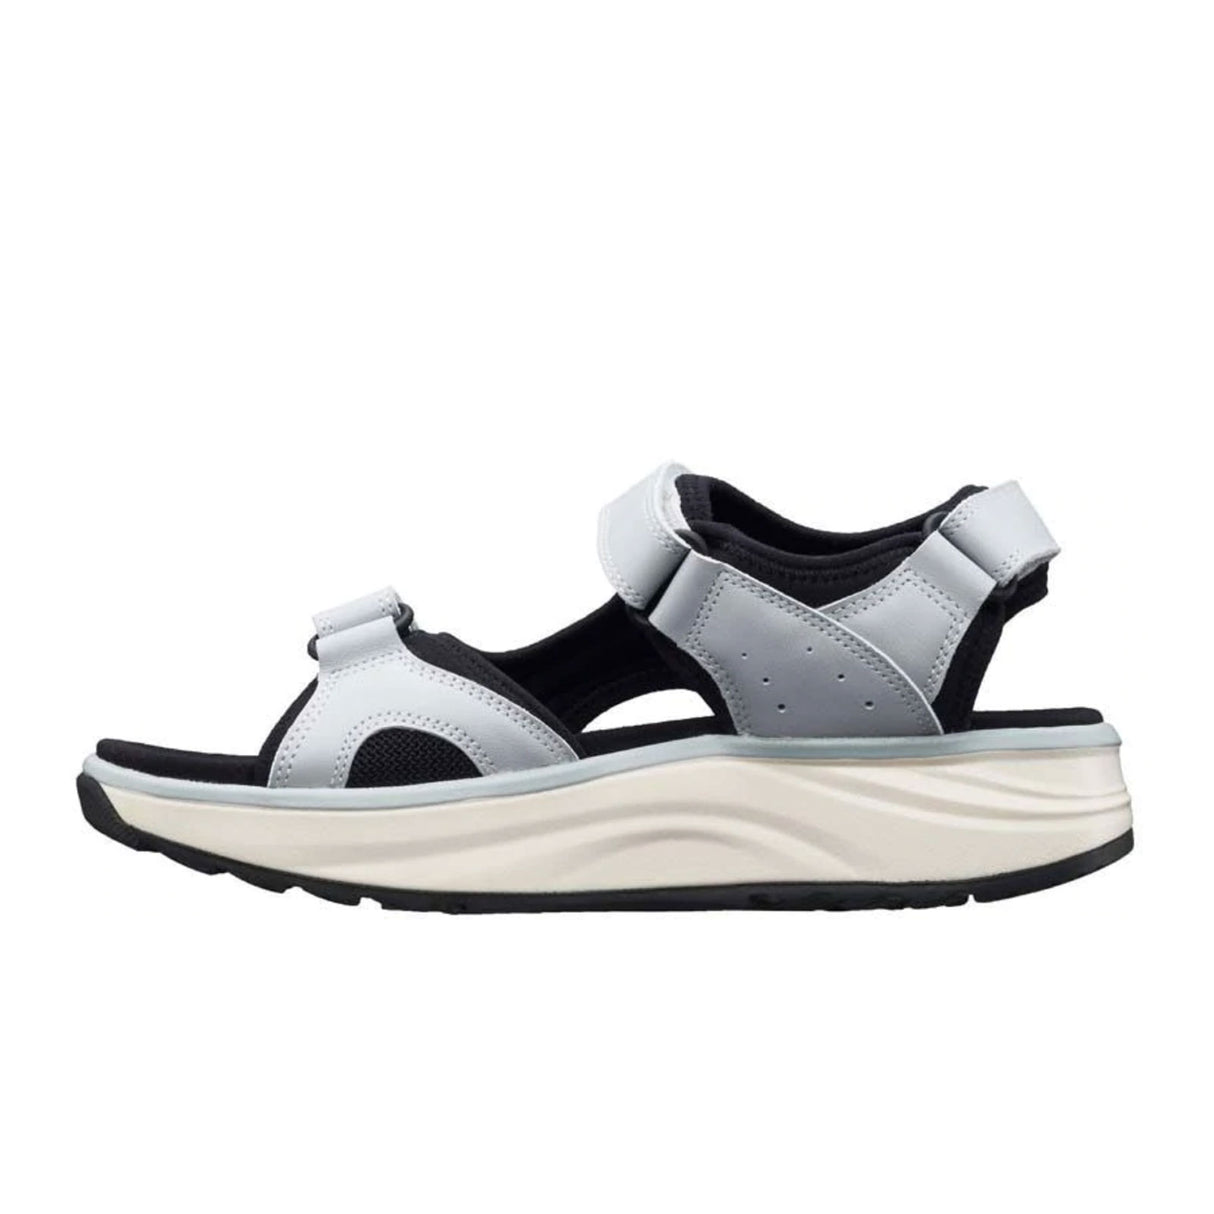 Joya Komodo (Women) - Light Blue/White Sandals - Active - The Heel Shoe Fitters